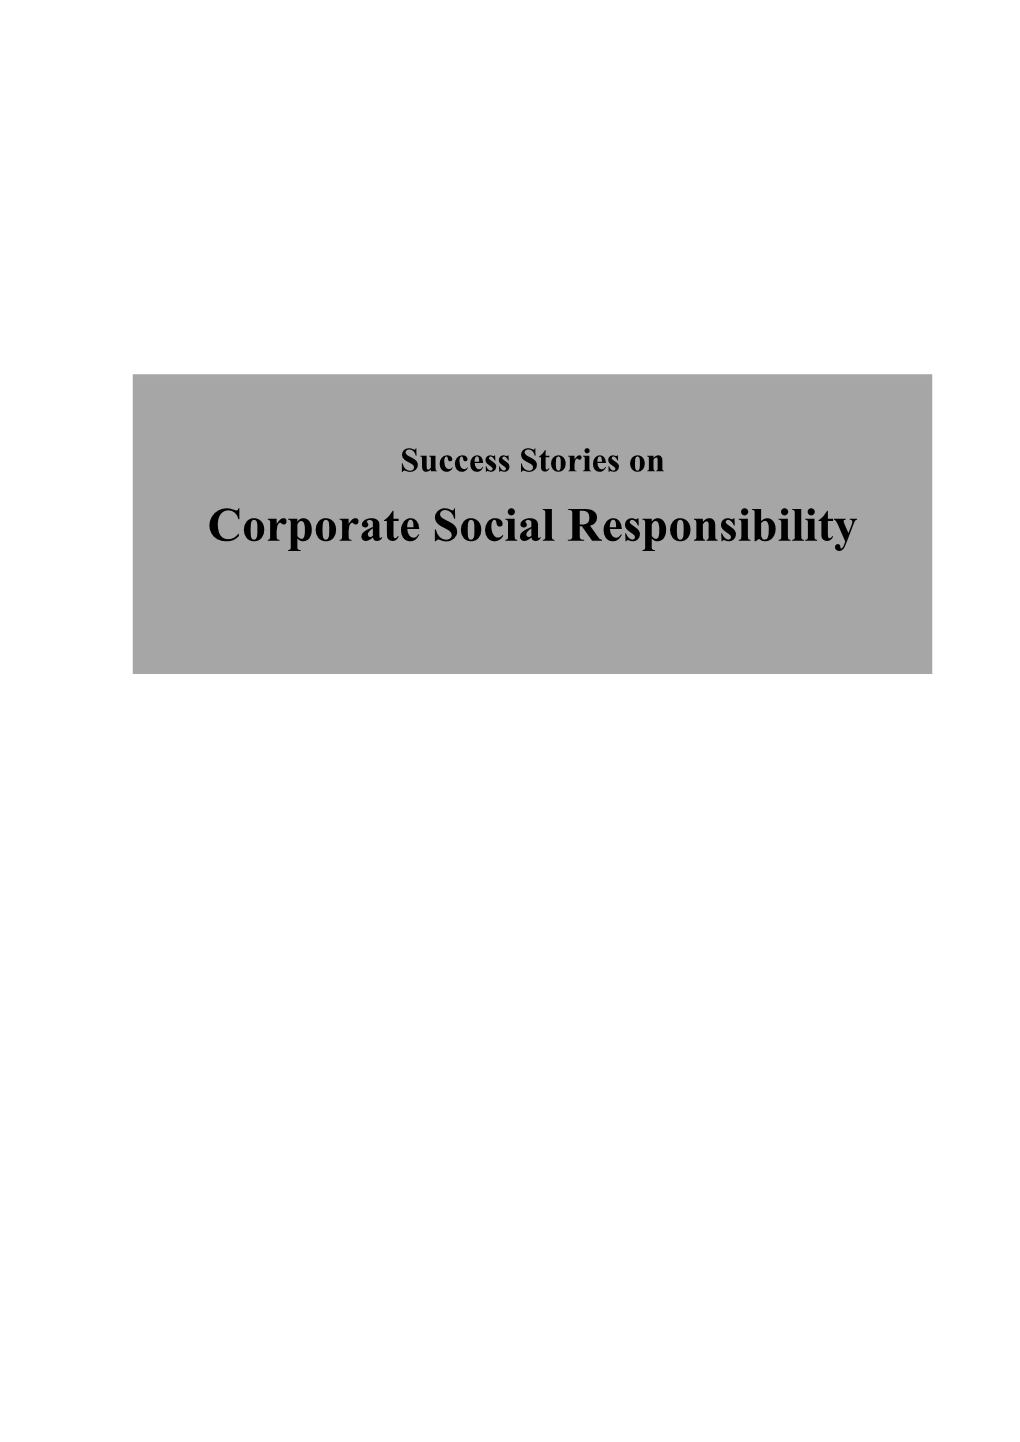 Corporate Social Responsibility Aditya Birla Capital Limited Aditya Birla Sun Life Insurance Company Limited Mumbai